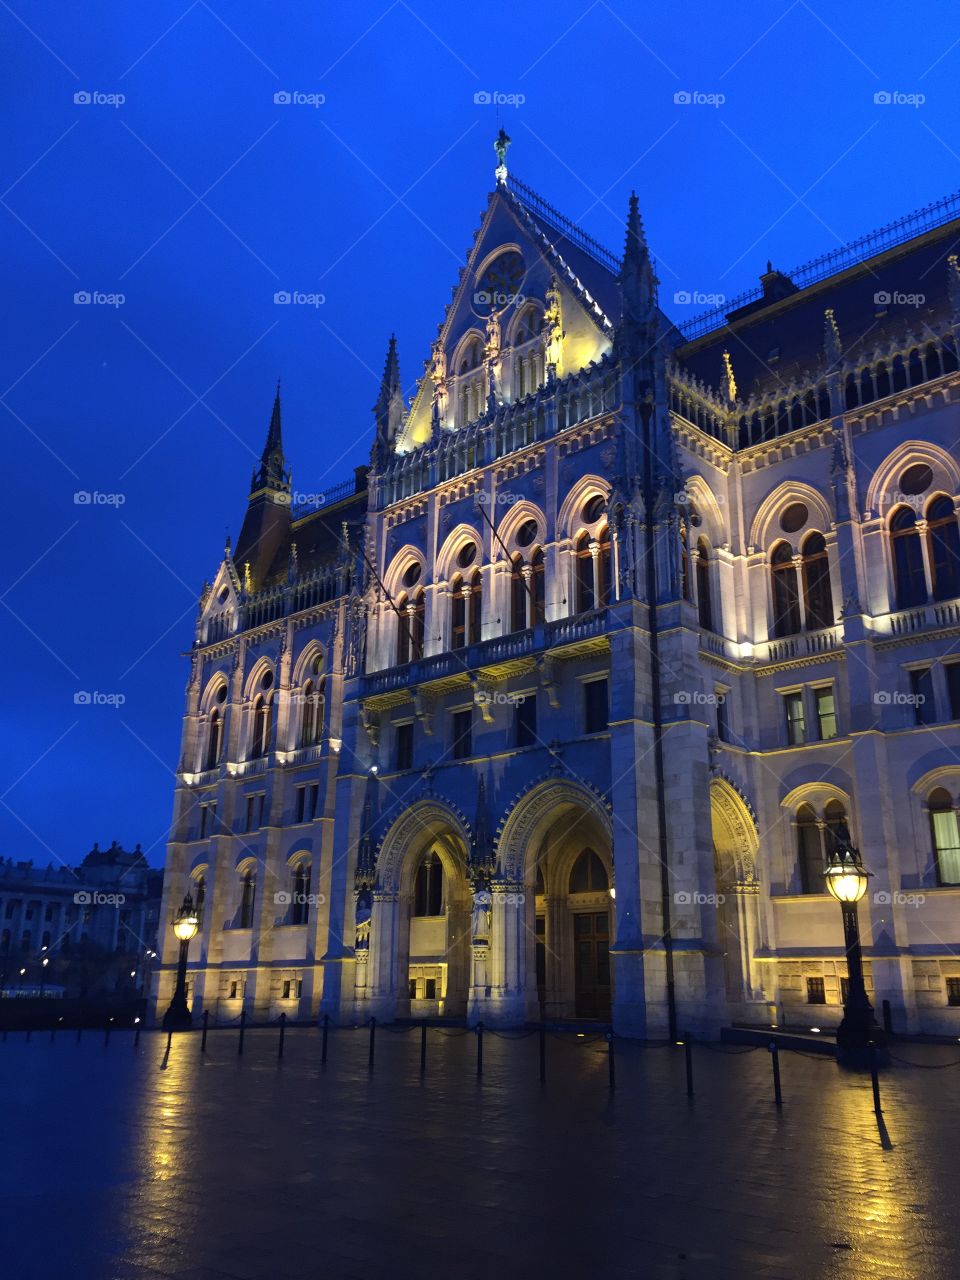 Hungarian parliament at night 